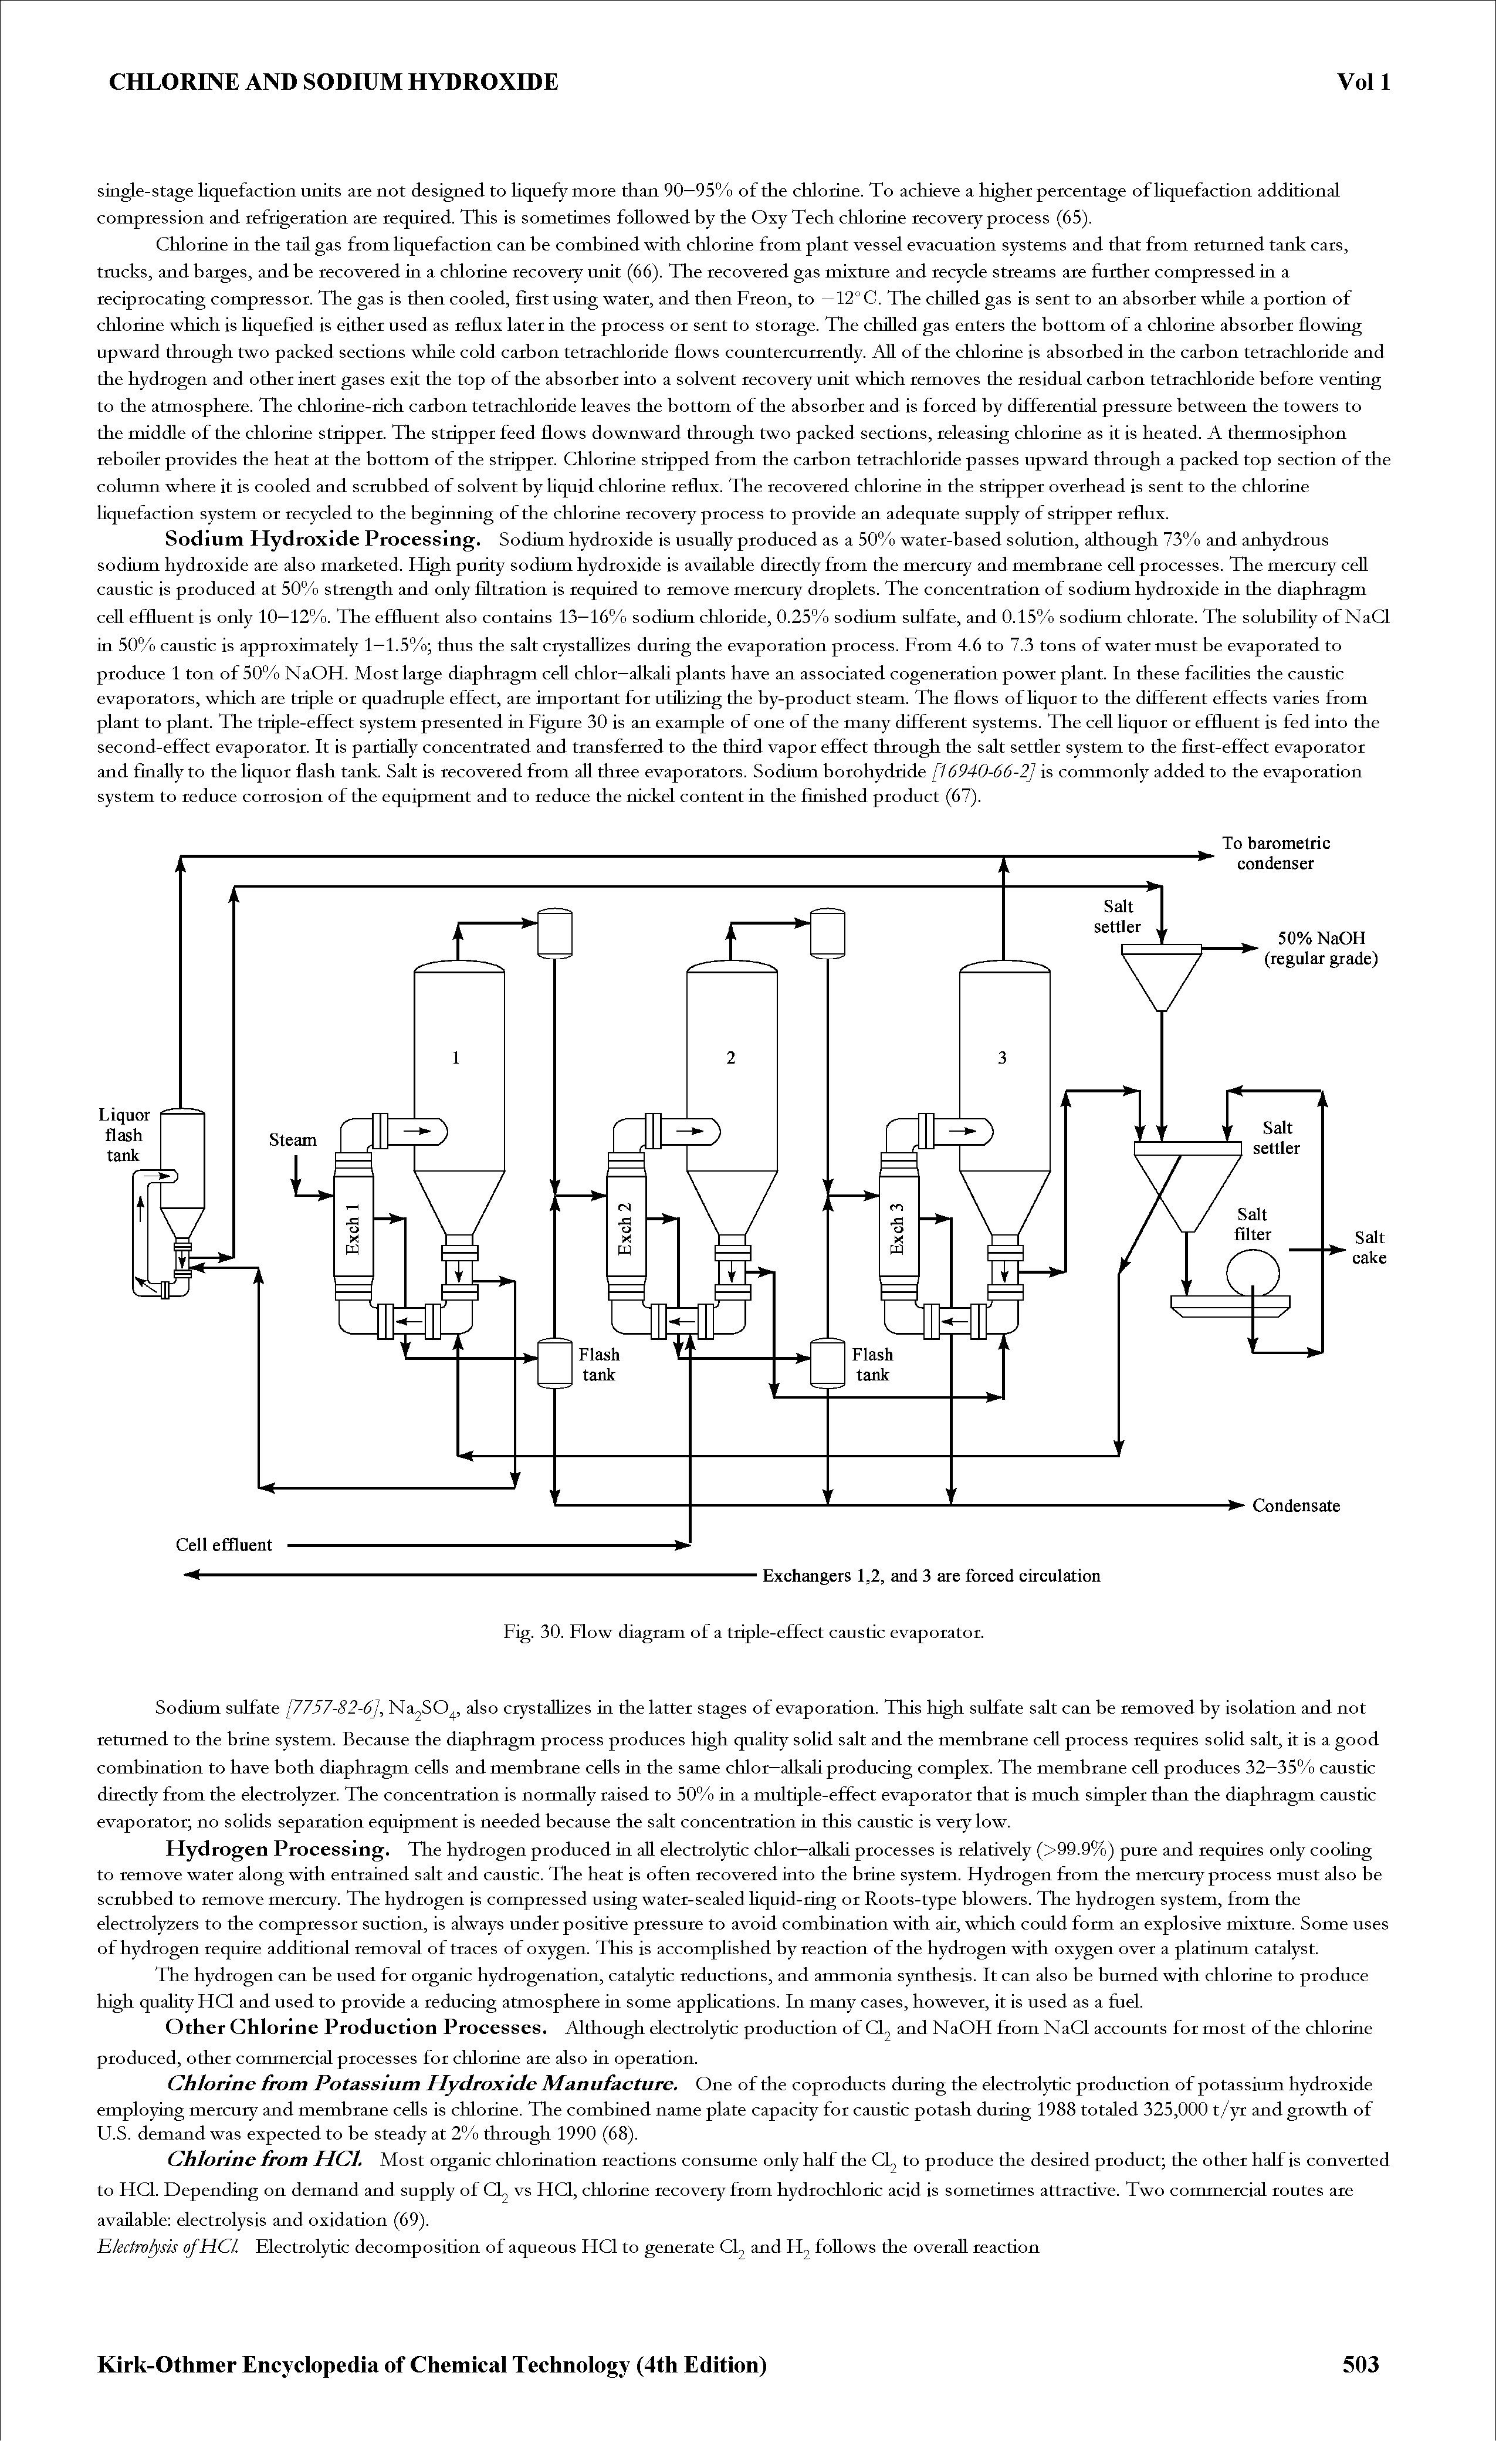 Fig. 30. Flow diagram of a triple-effect caustic evaporator.